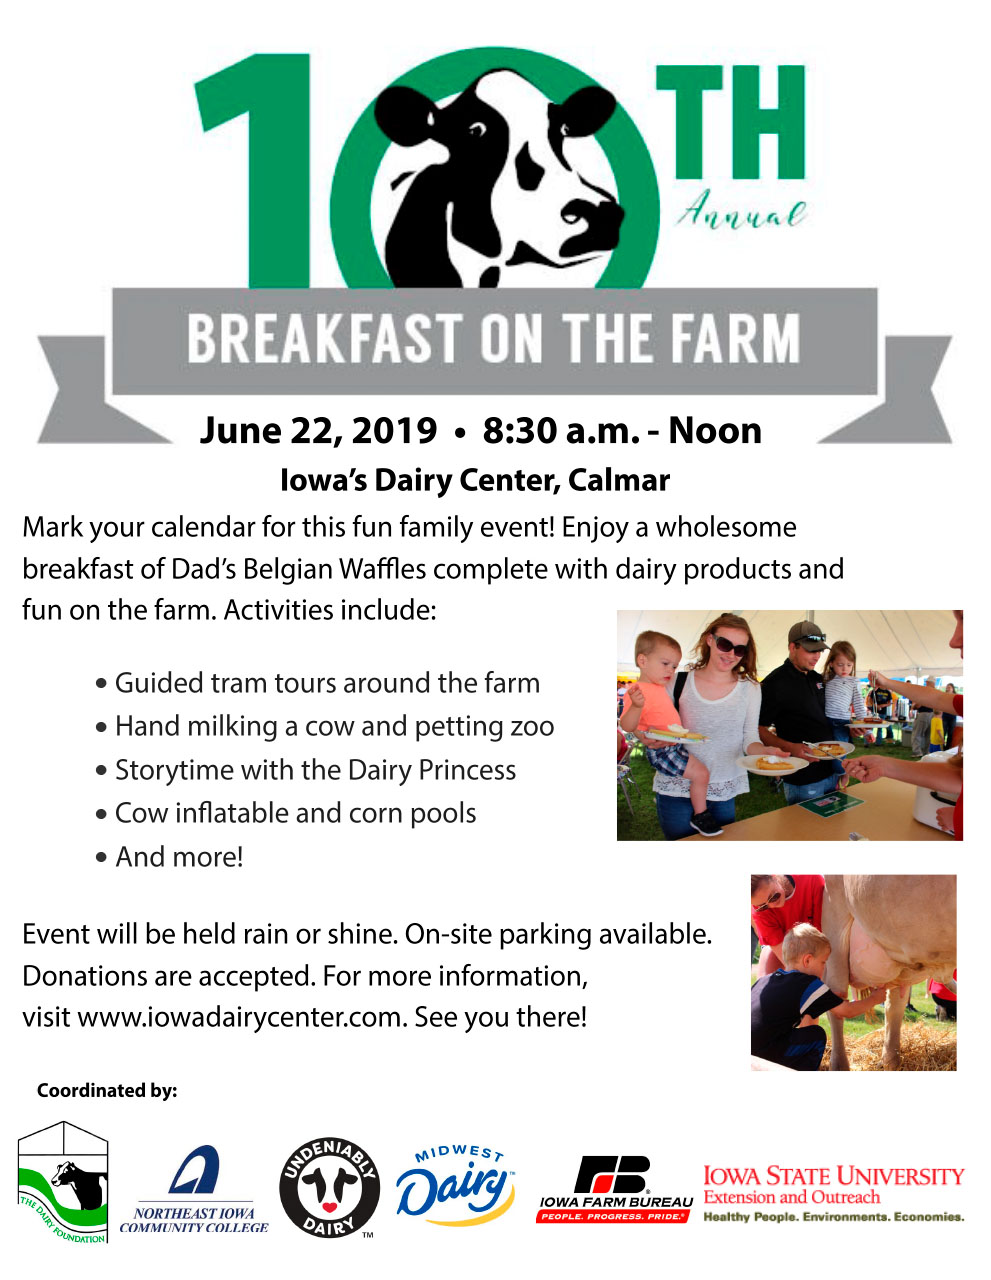 2019 Iowa Dairy Center Breakfast on the Farm